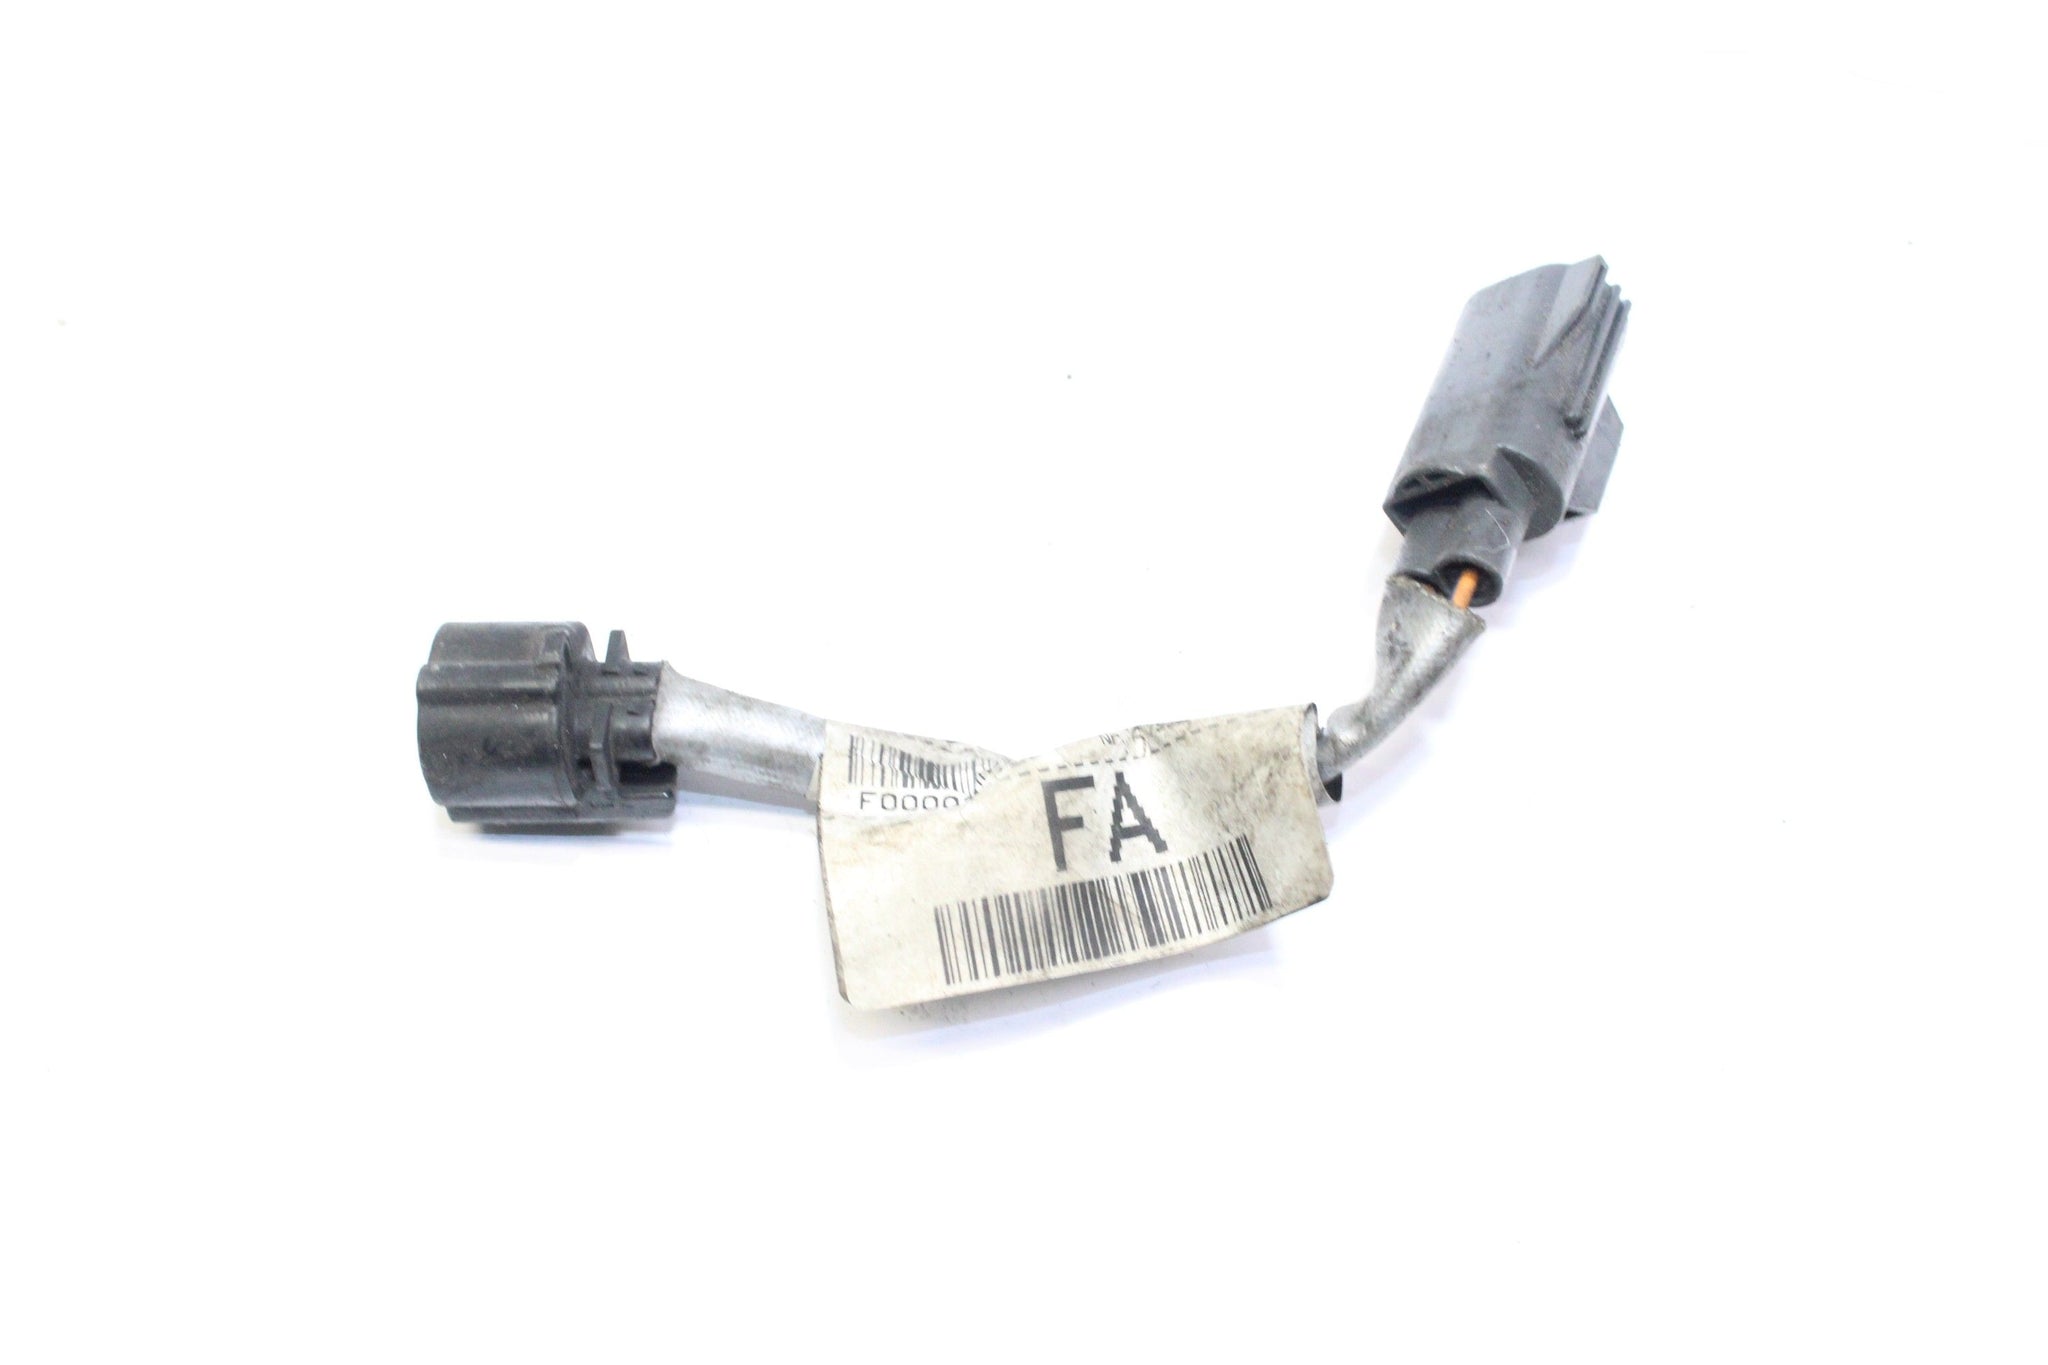 Jaguar XF Alternator Wiring Loom Cable 3.0 DX23-9137-FA